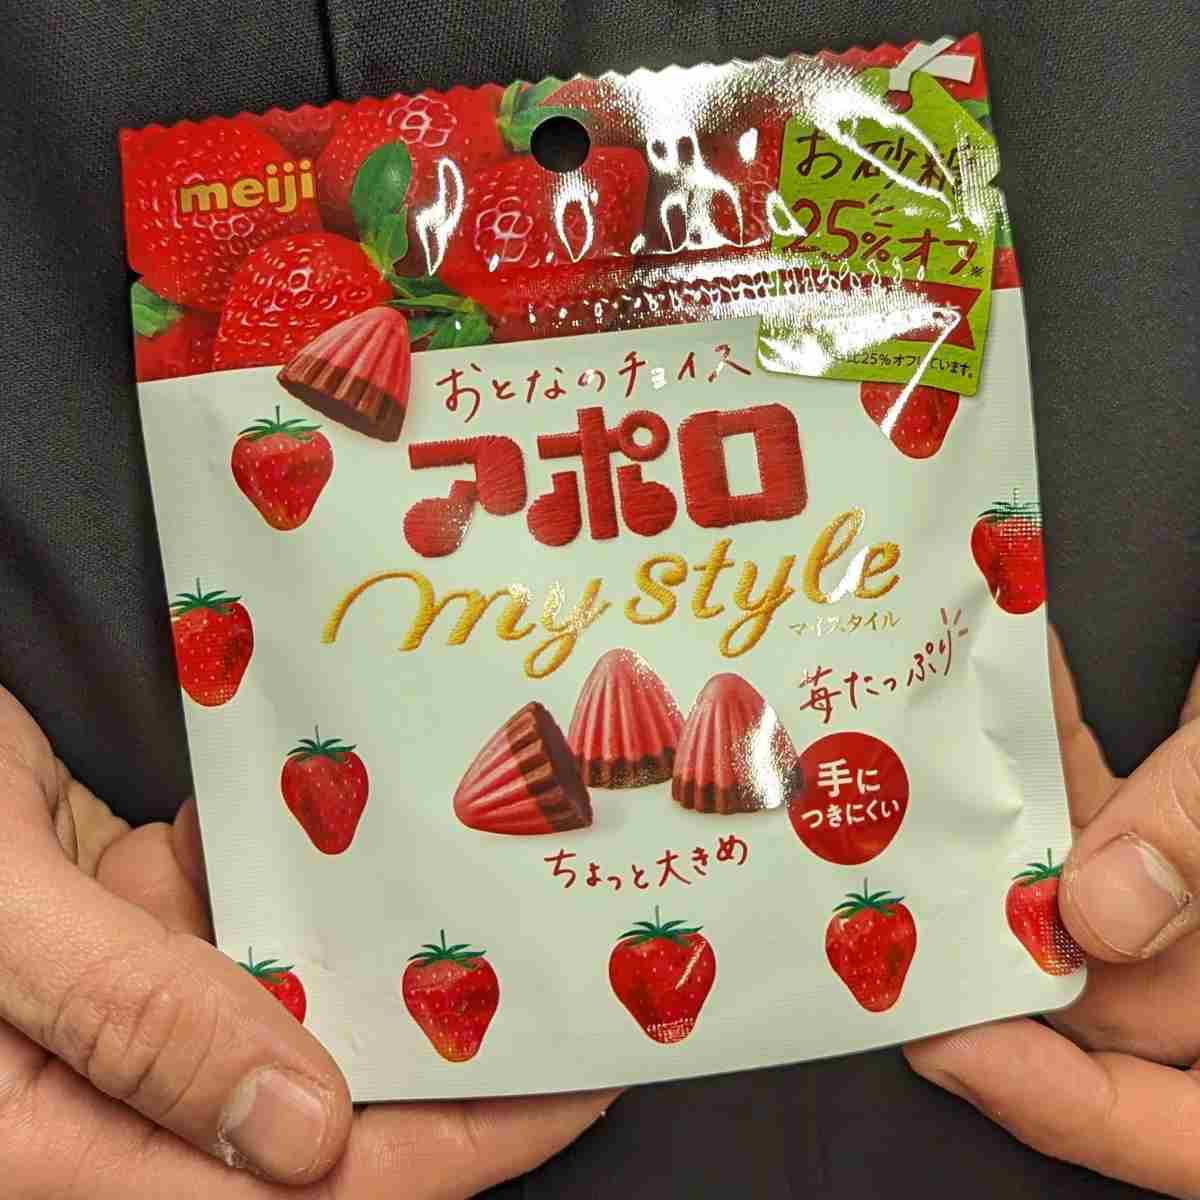 Apollo strawberry chocolate